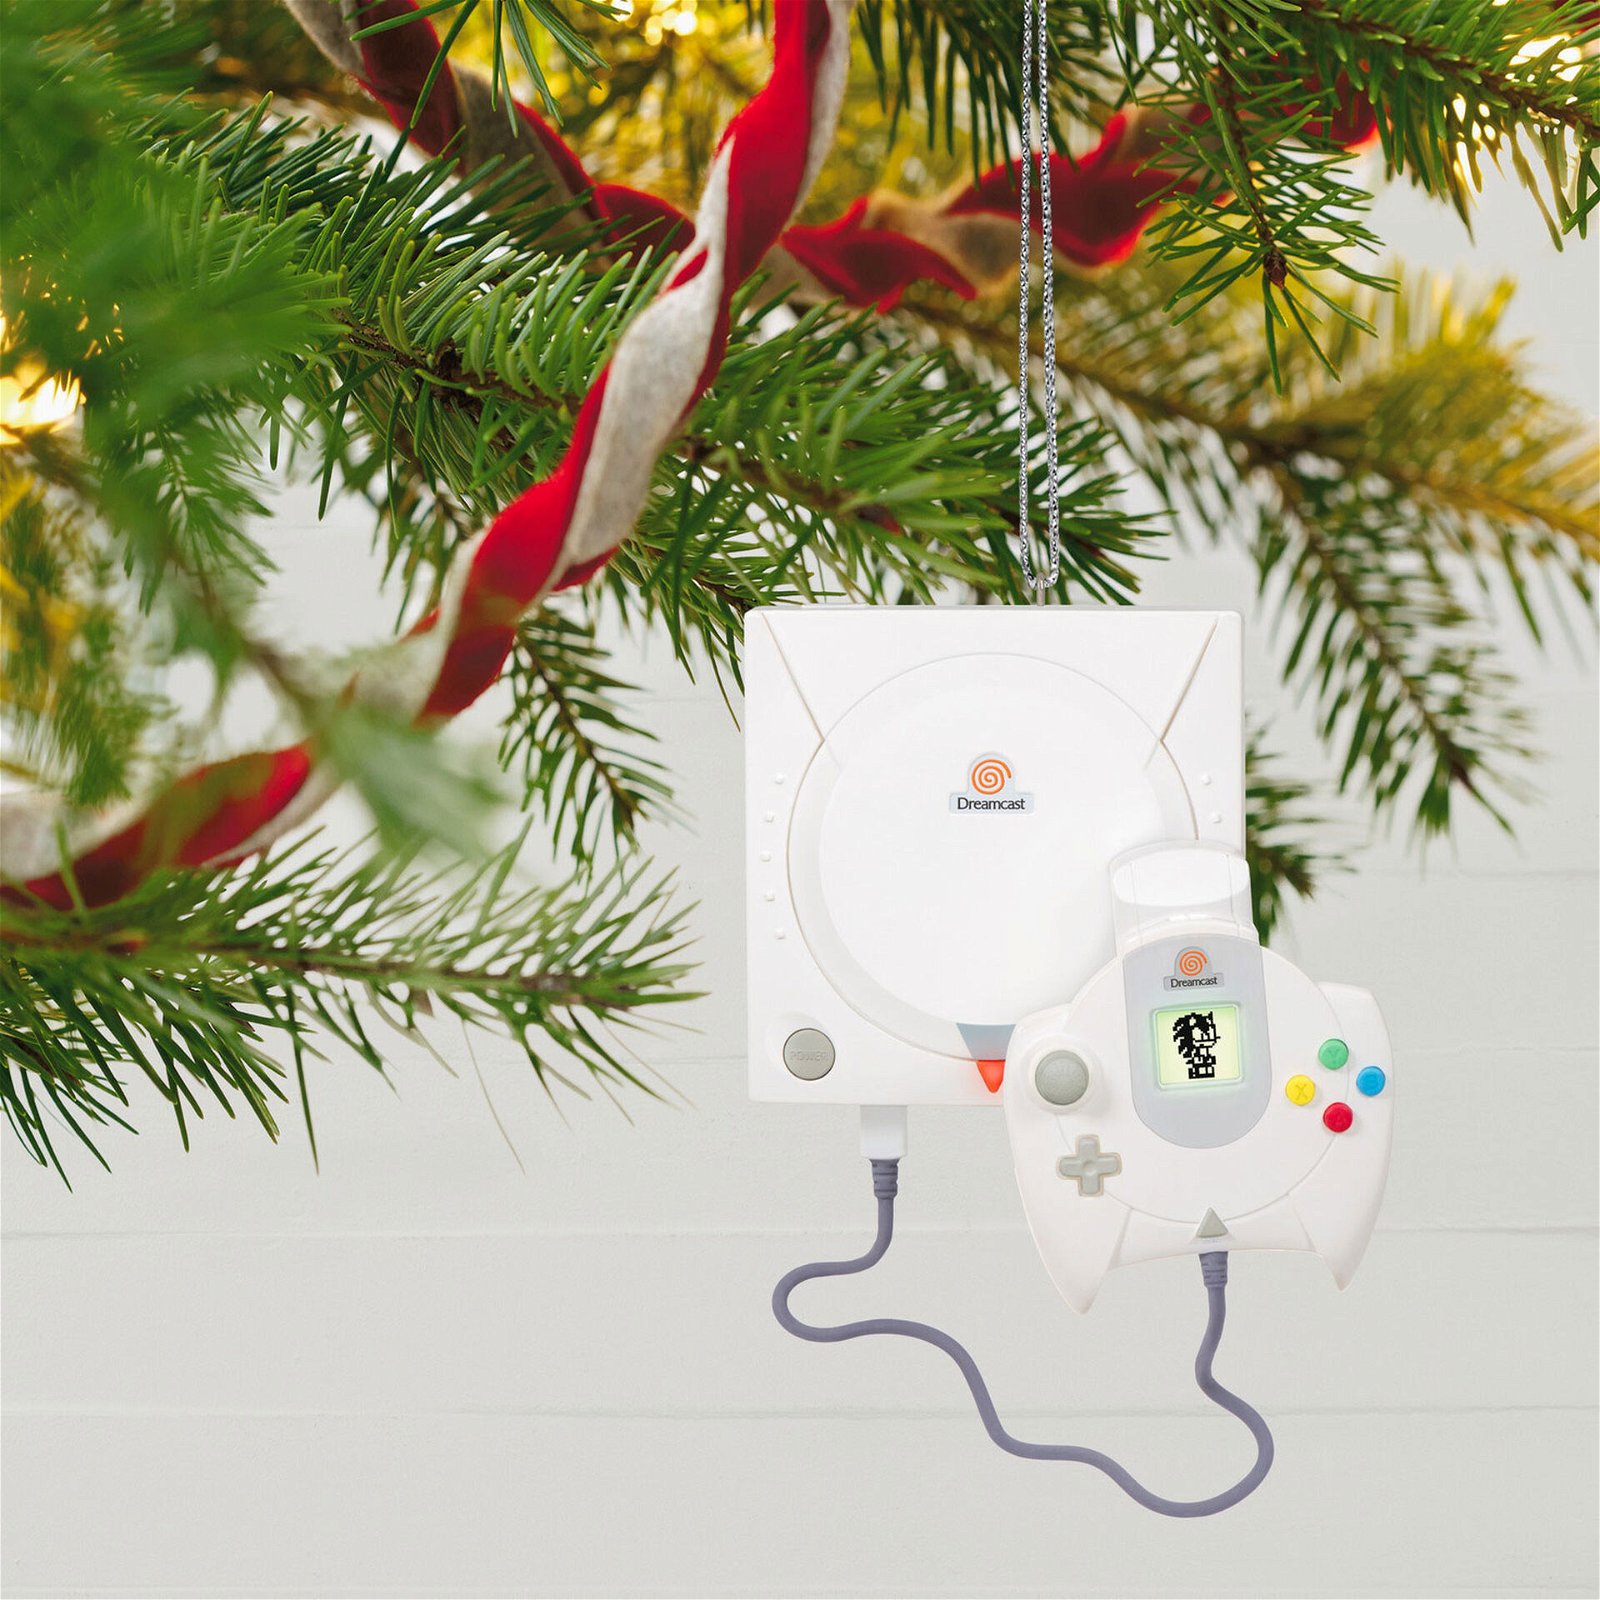 Hallmark SEGA Dreamcast Christmas Ornament up for Pre-order